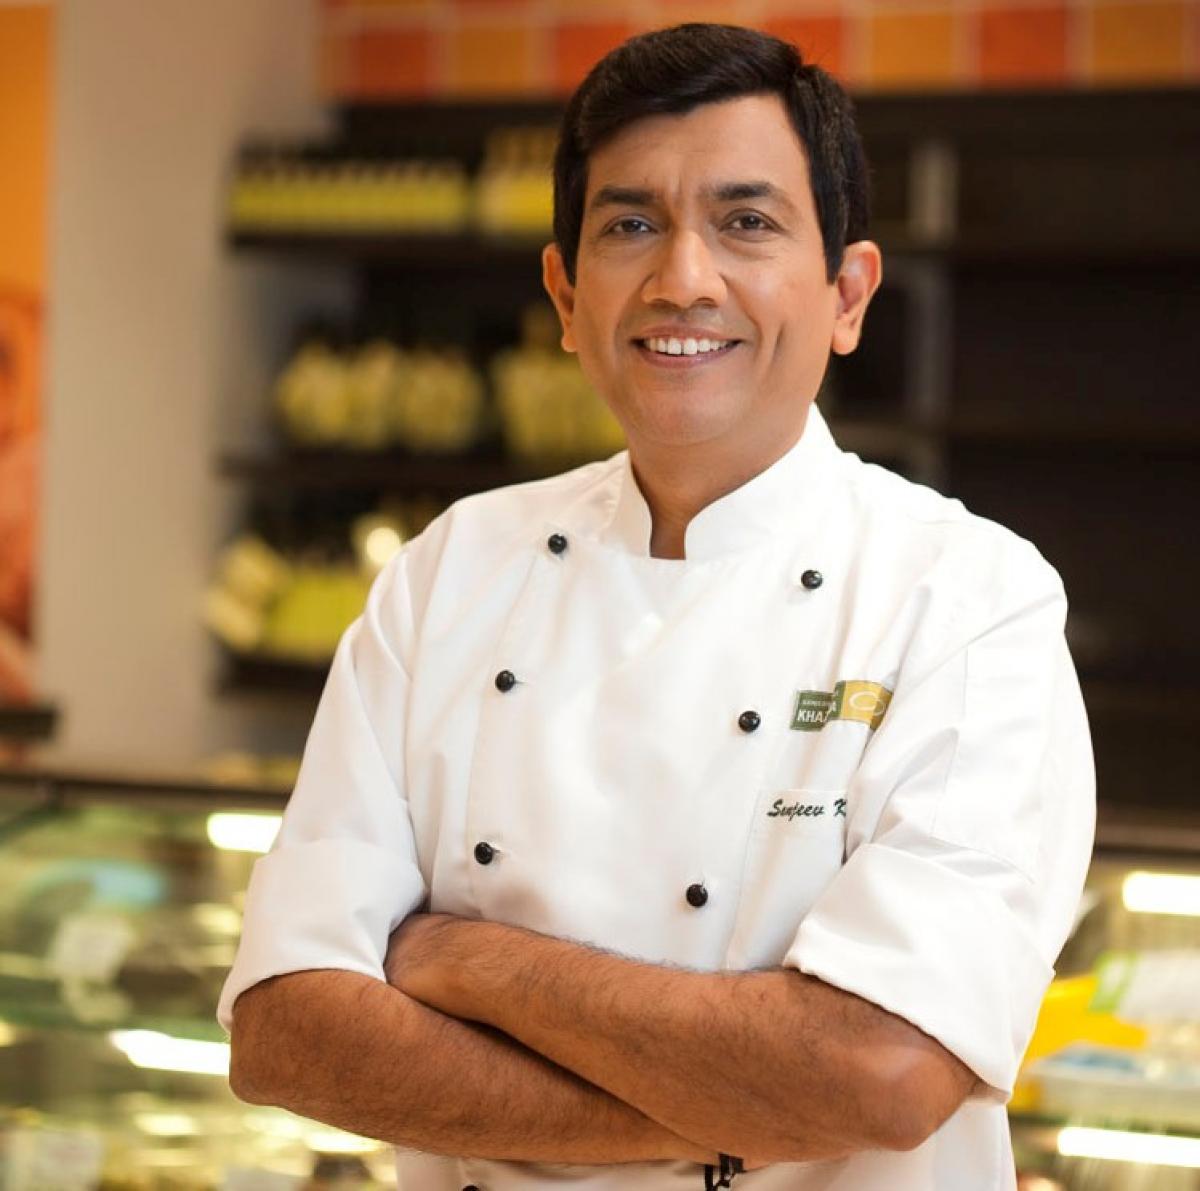 Sanjeev Kapoor talks food, recipes with fans online